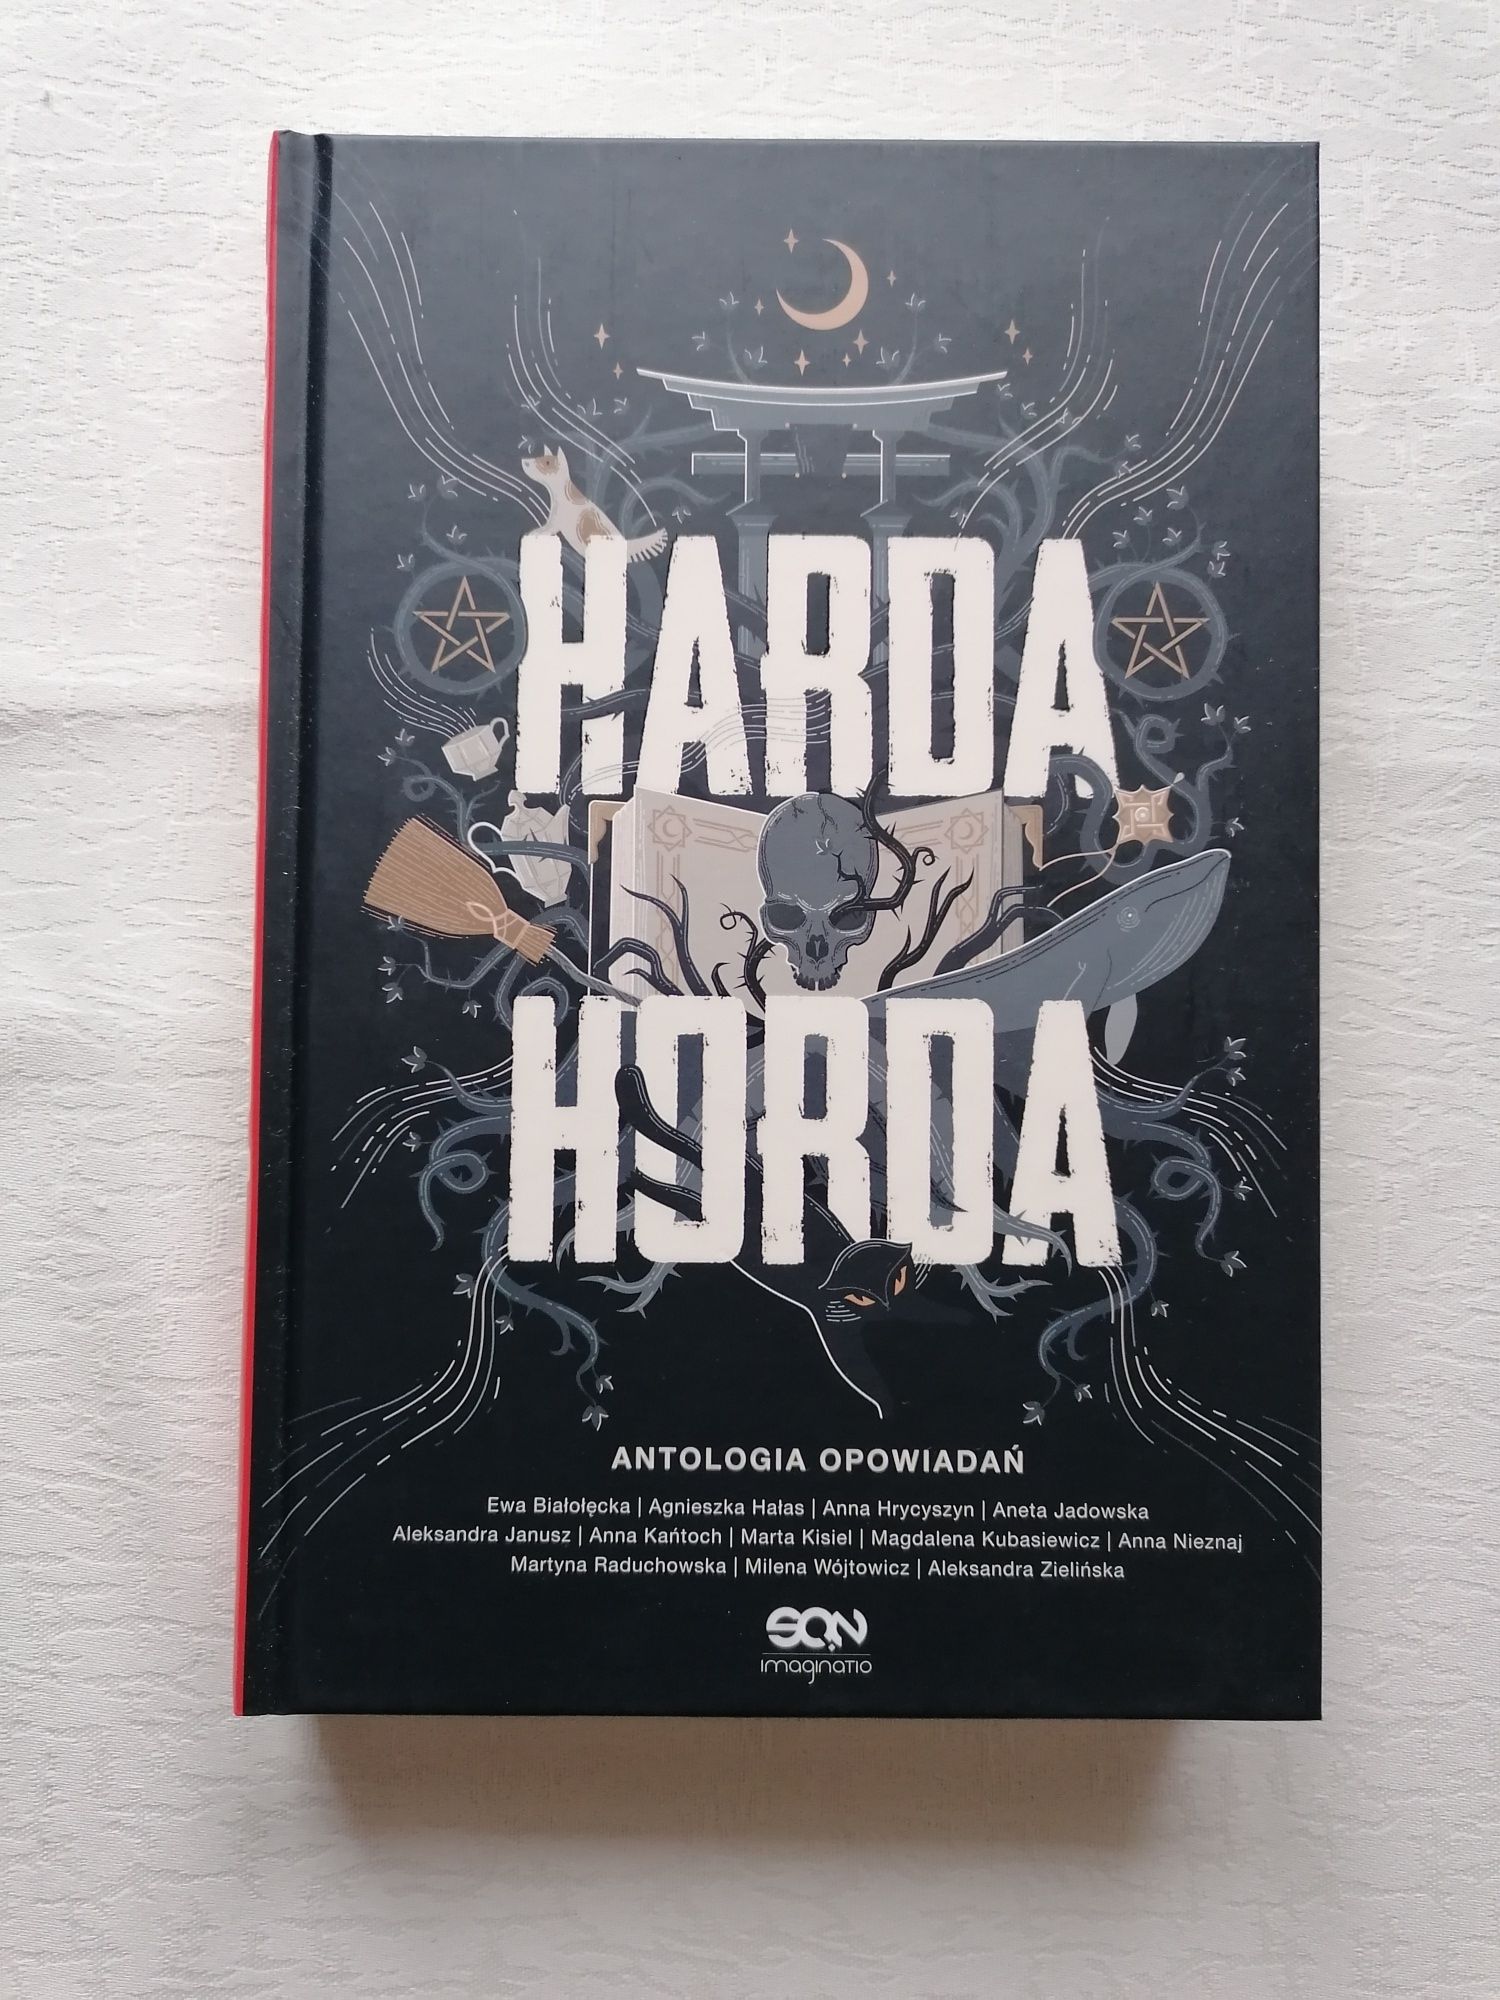 Harda horda - antologia